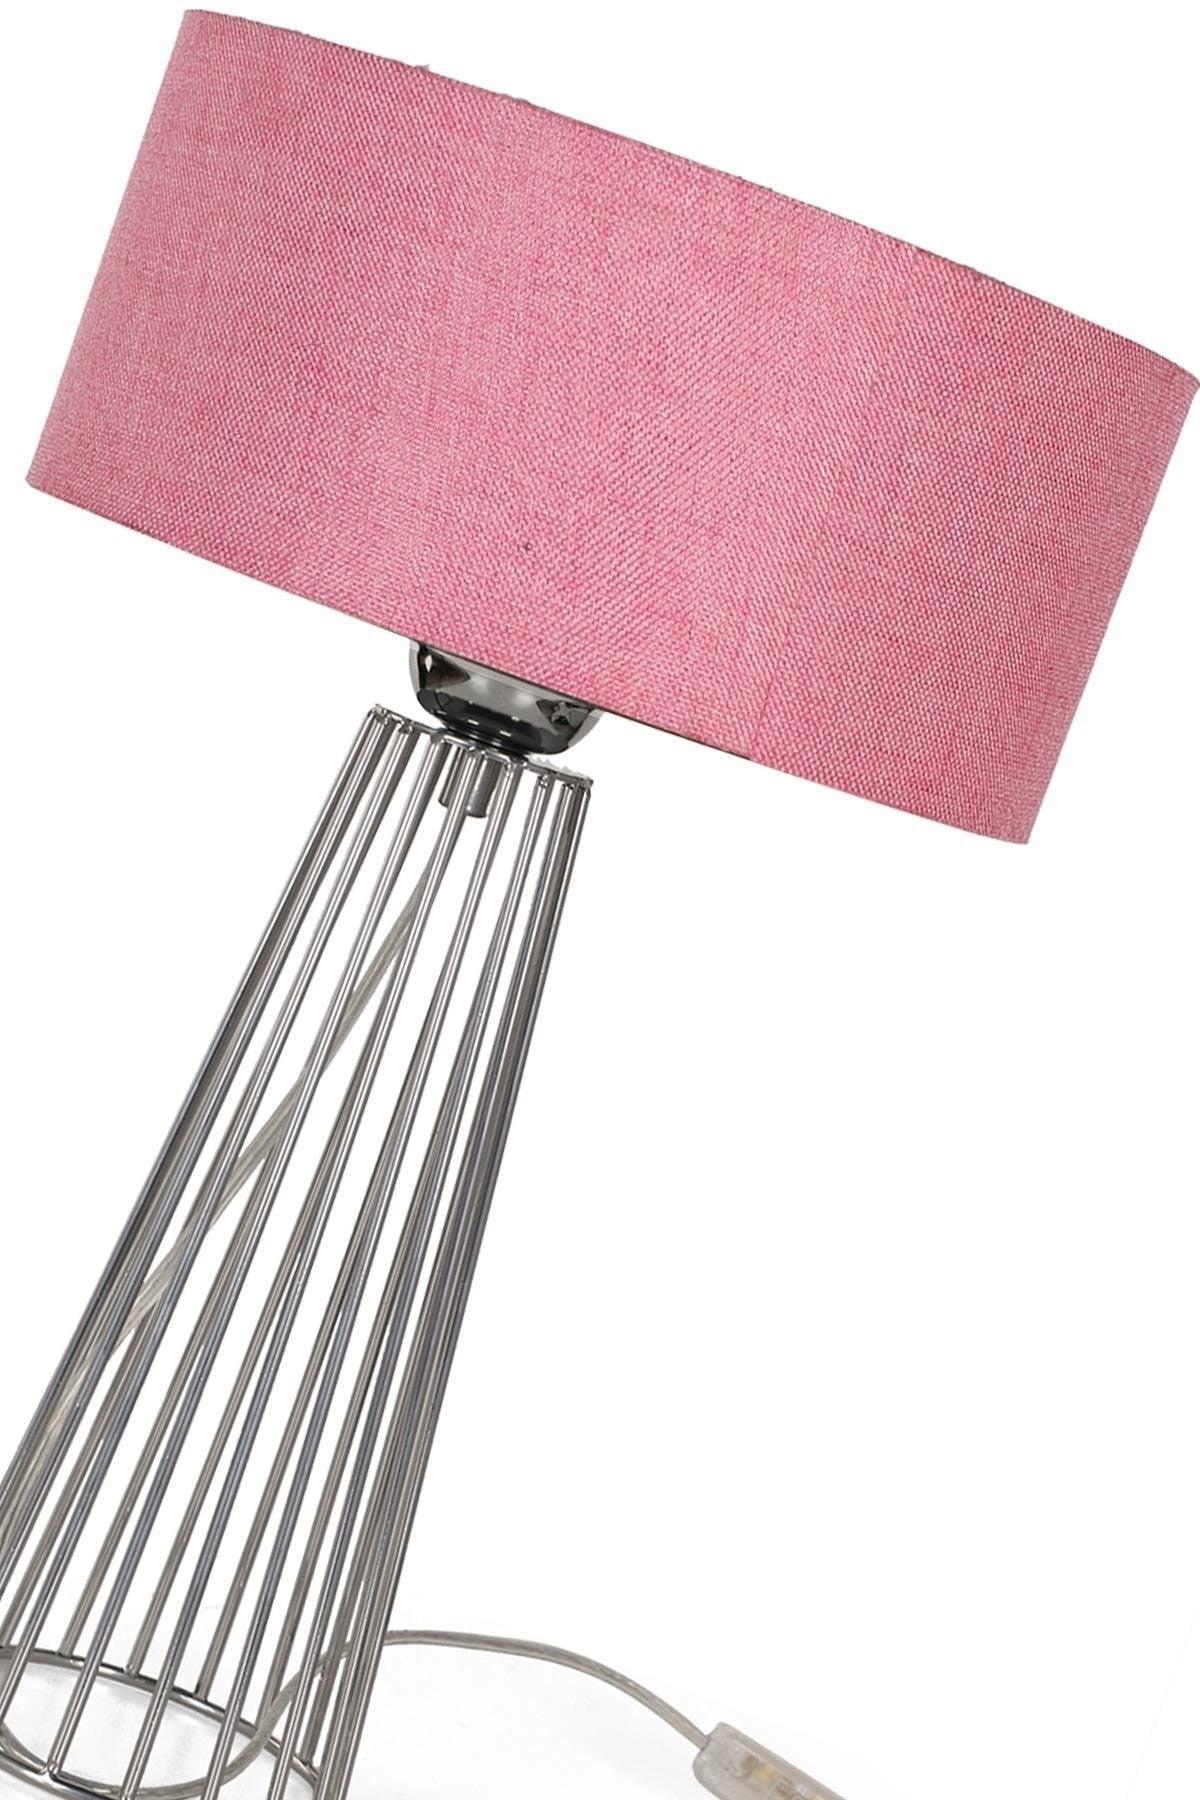 Philippine Table Lamp Chrome Pink Hat - Swordslife